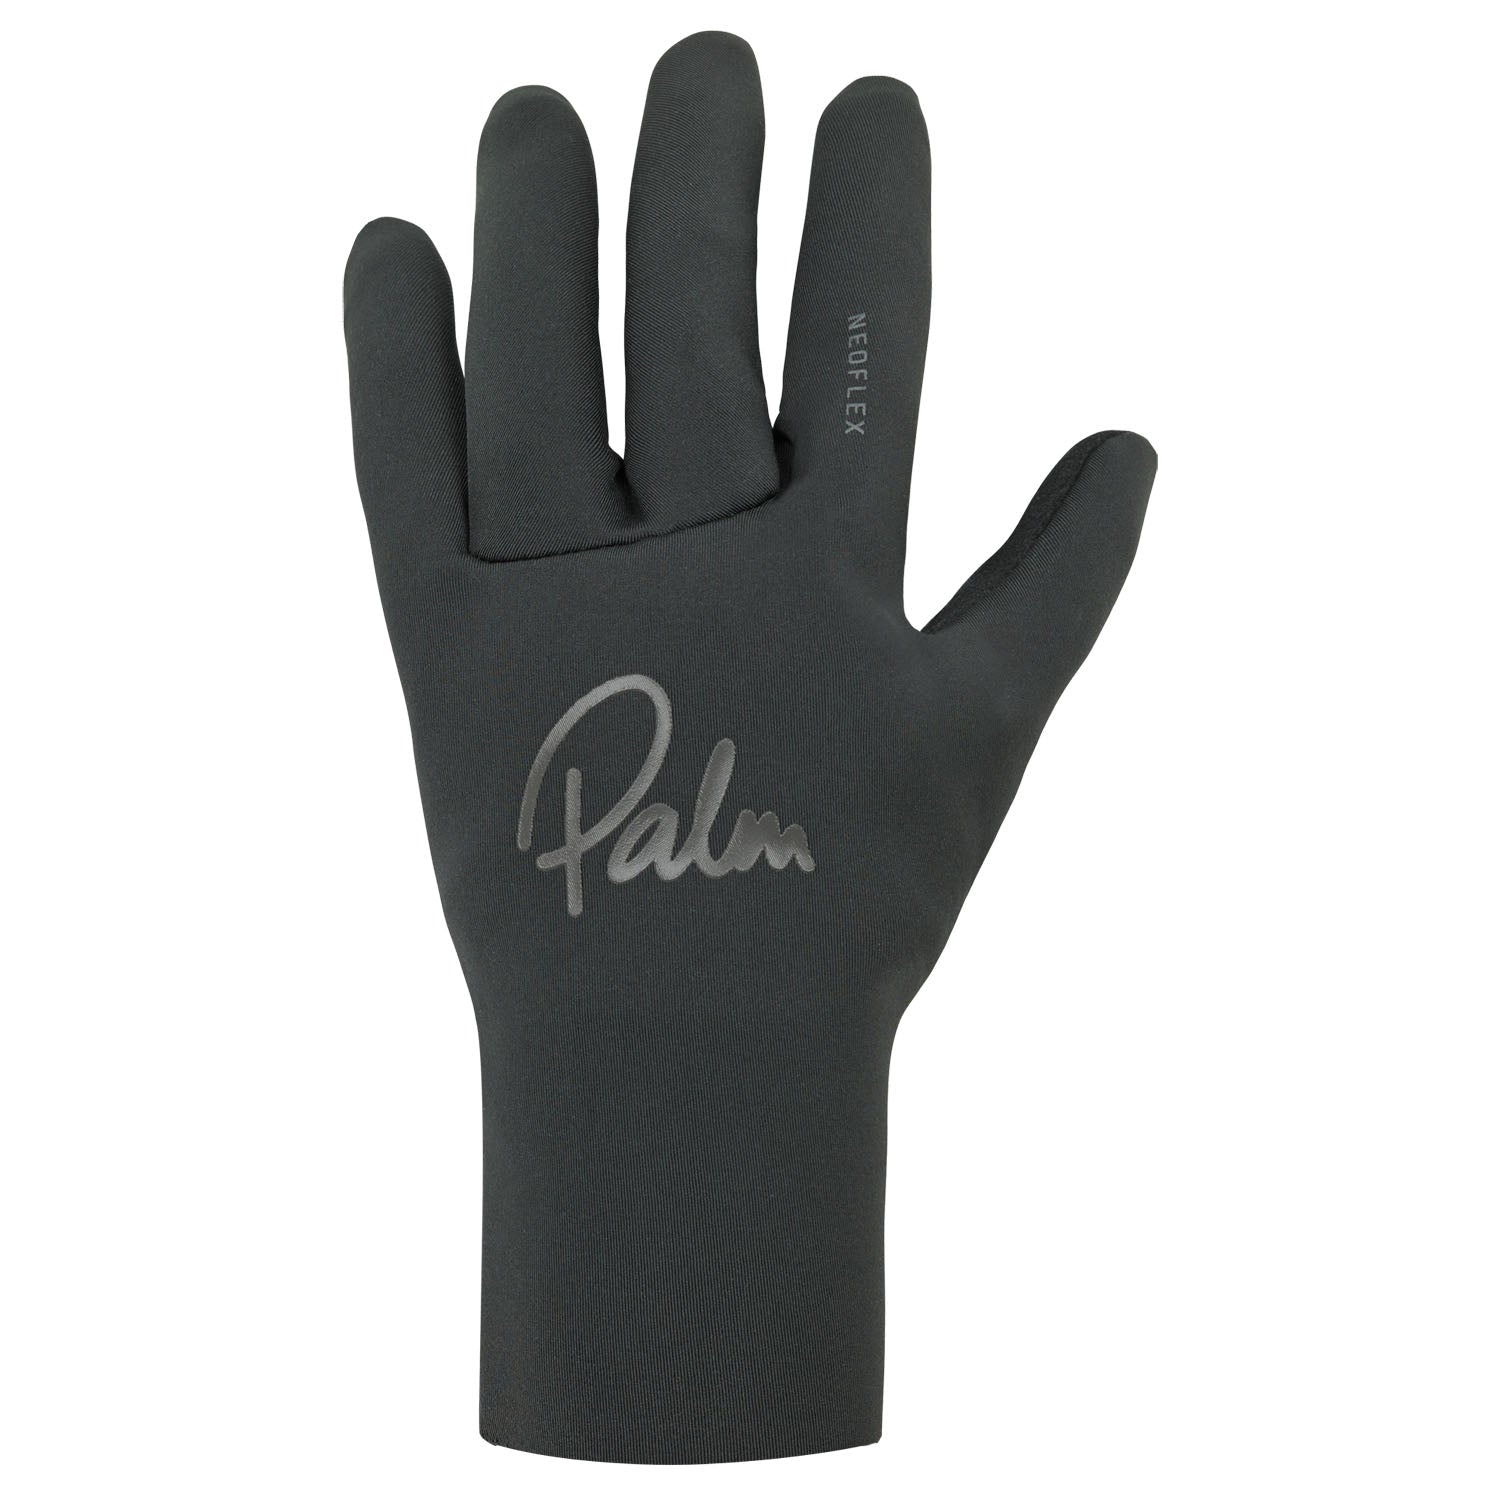 Palm NeoFlex 0.5mm Kayaking Gloves